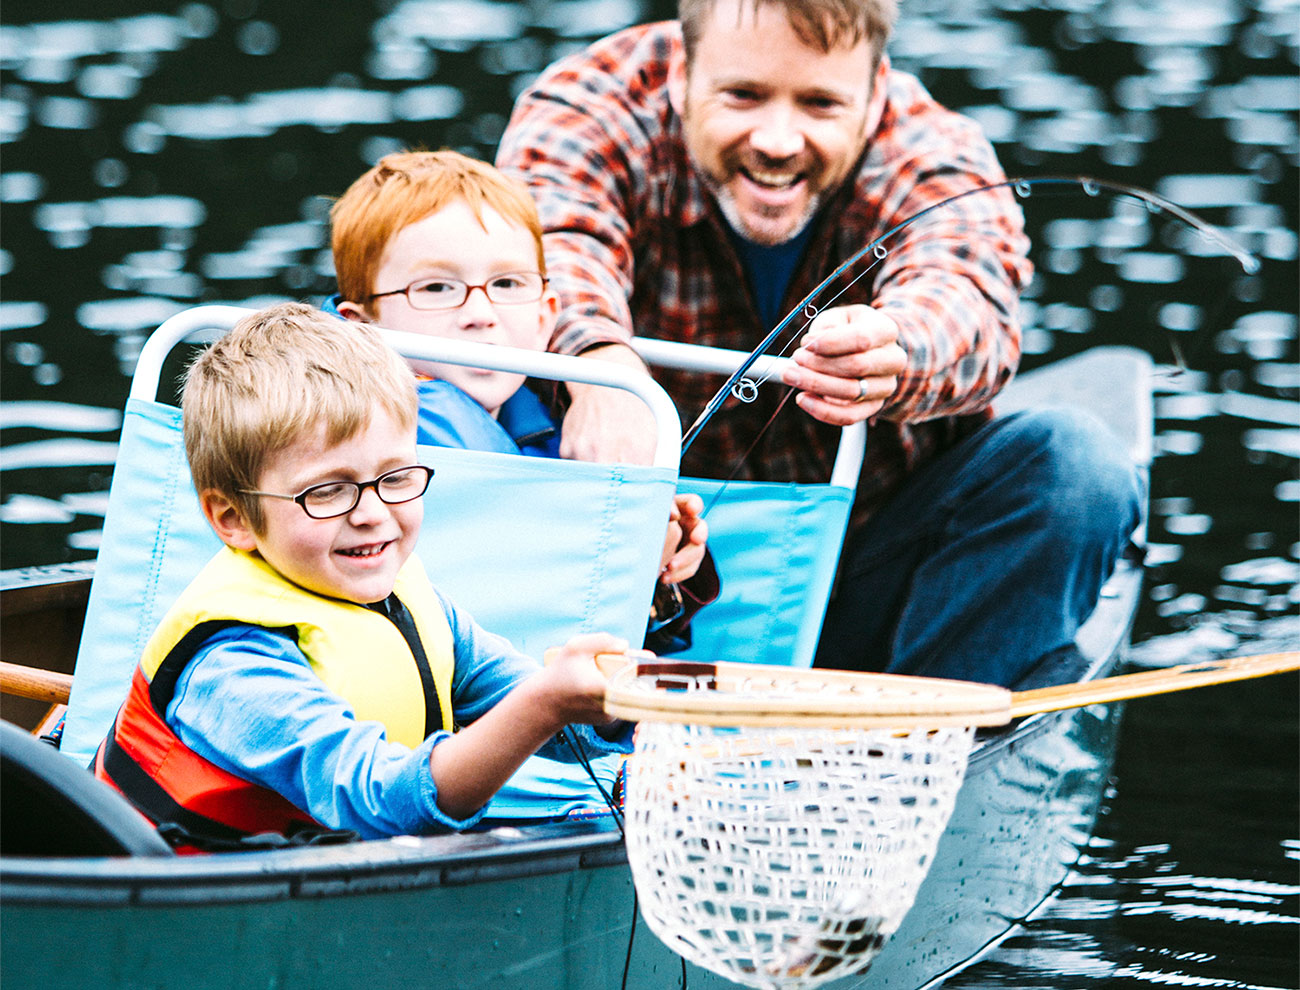 fishing-at-lake-with-family